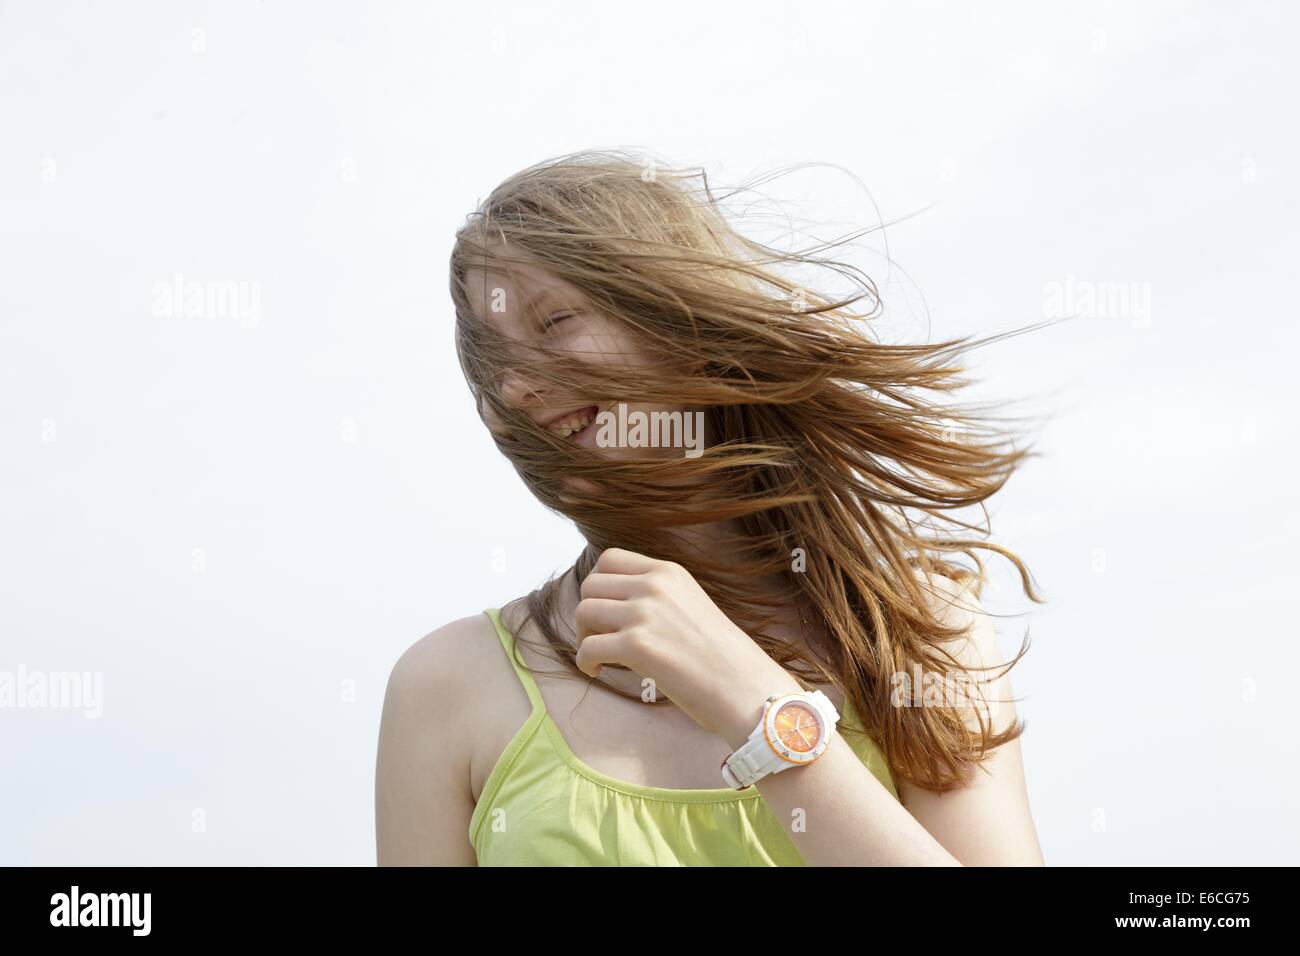 Teenage girl's les cheveux au vent, mer Baltique, Schleswig-Holstein, Allemagne Banque D'Images